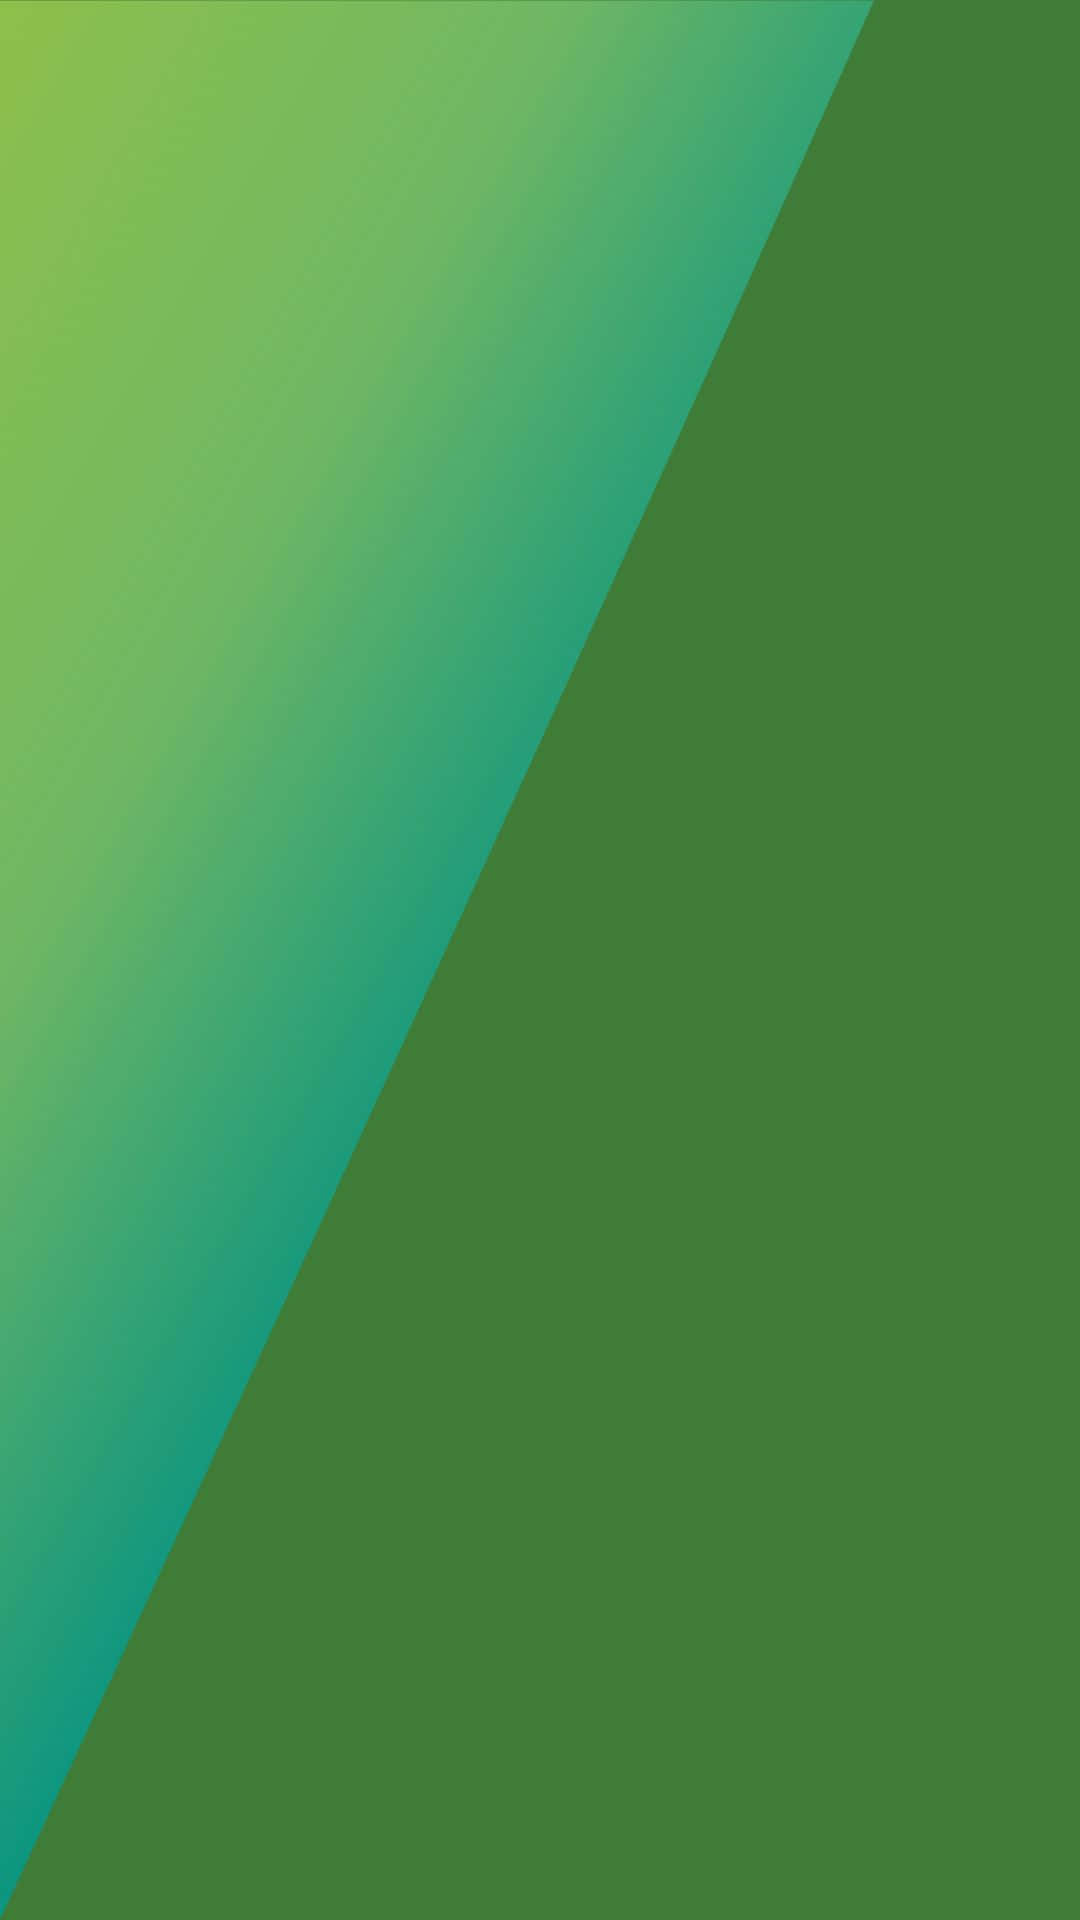 Plain  Dark Green  Gradient Background Wallpaper Download  MobCup